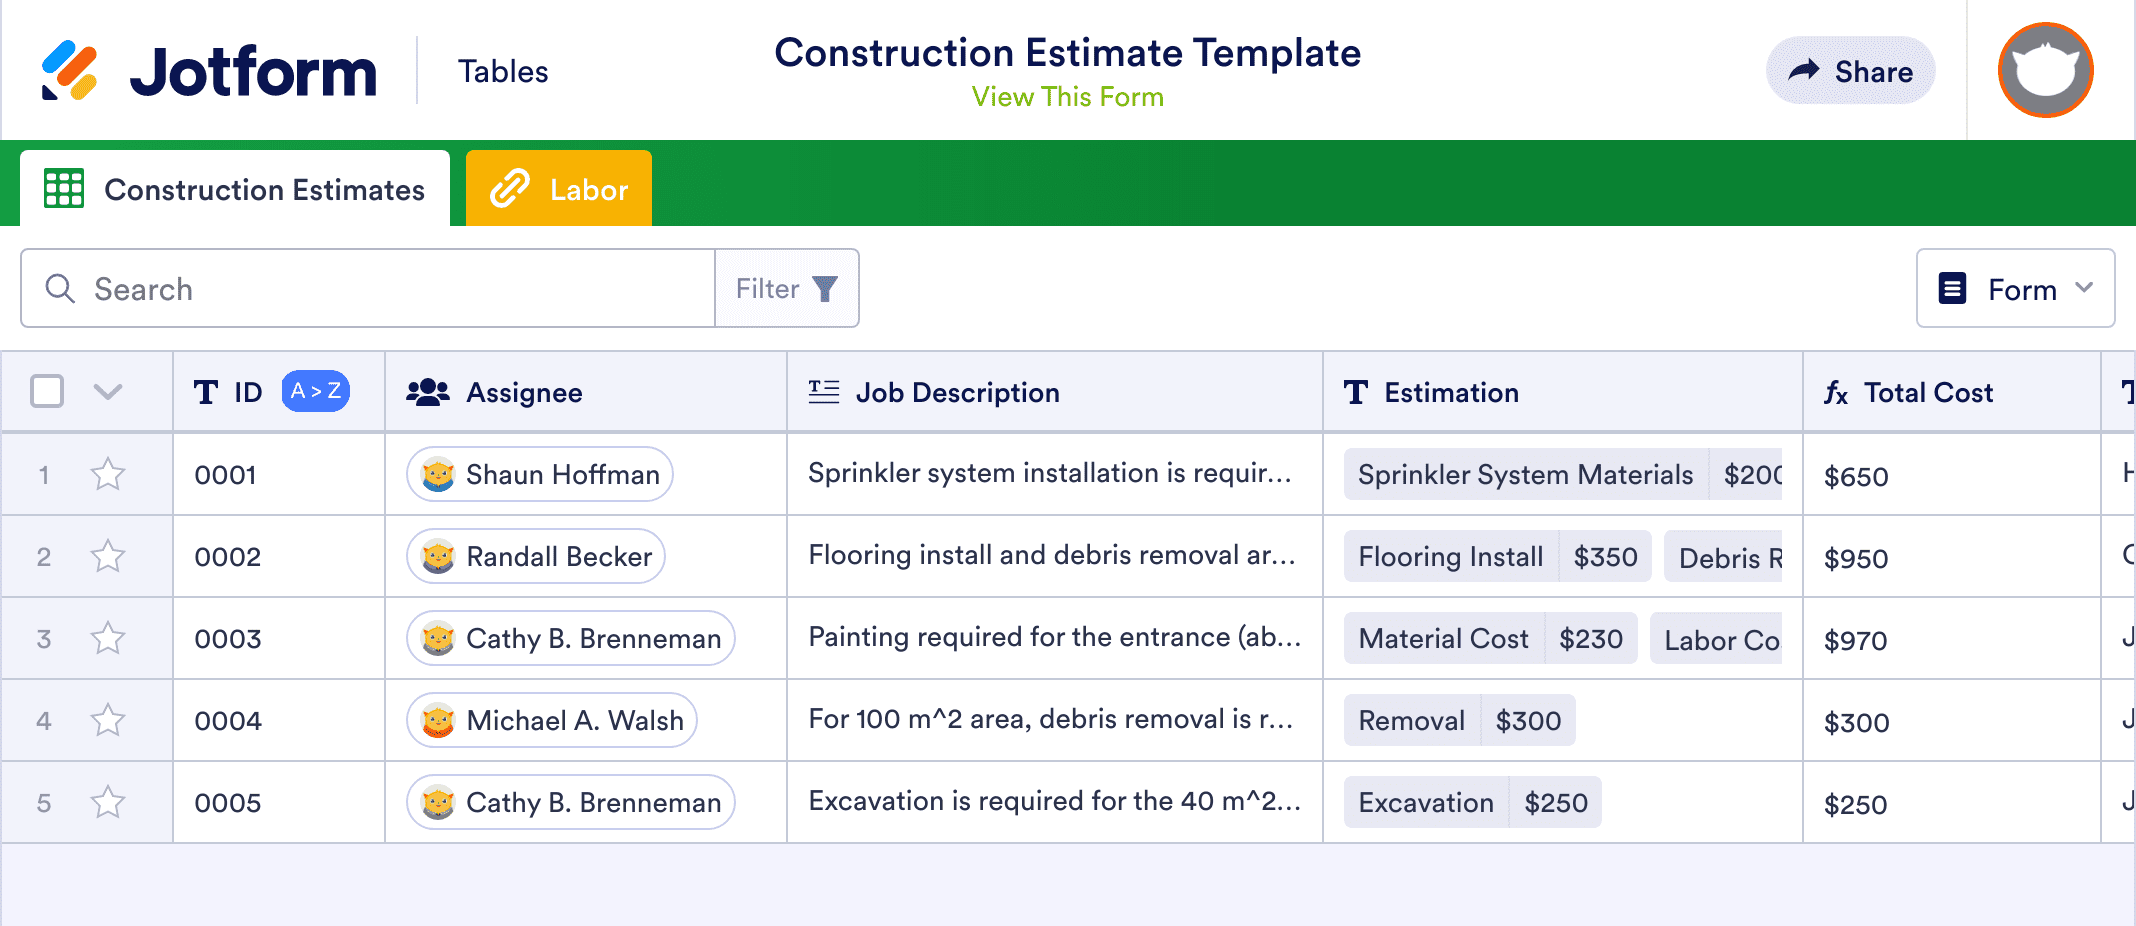 Construction Estimate Template